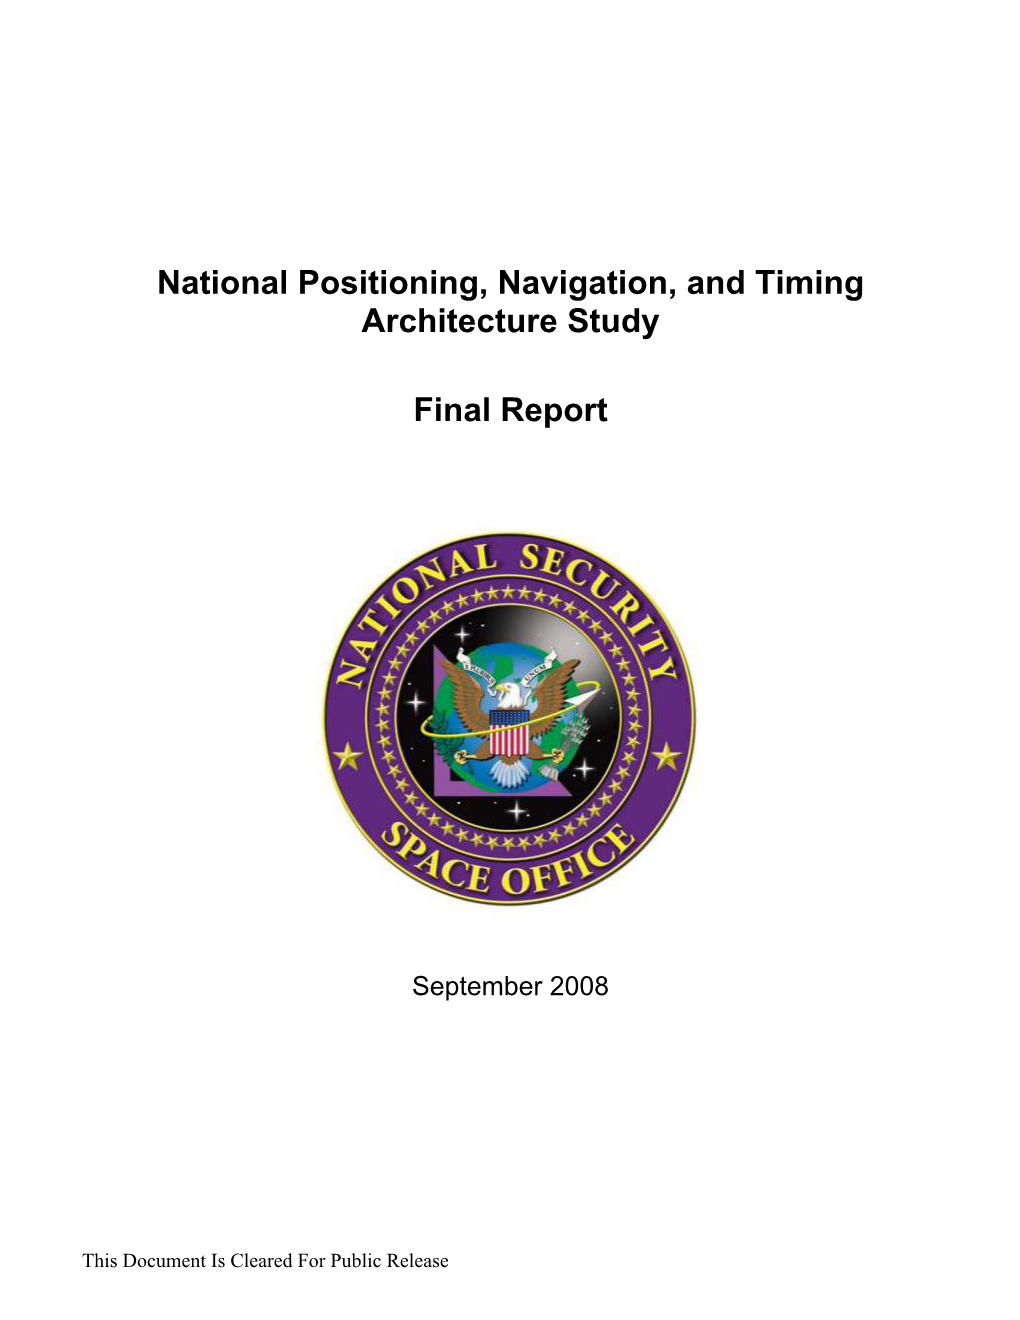 National PNT Architecture Study